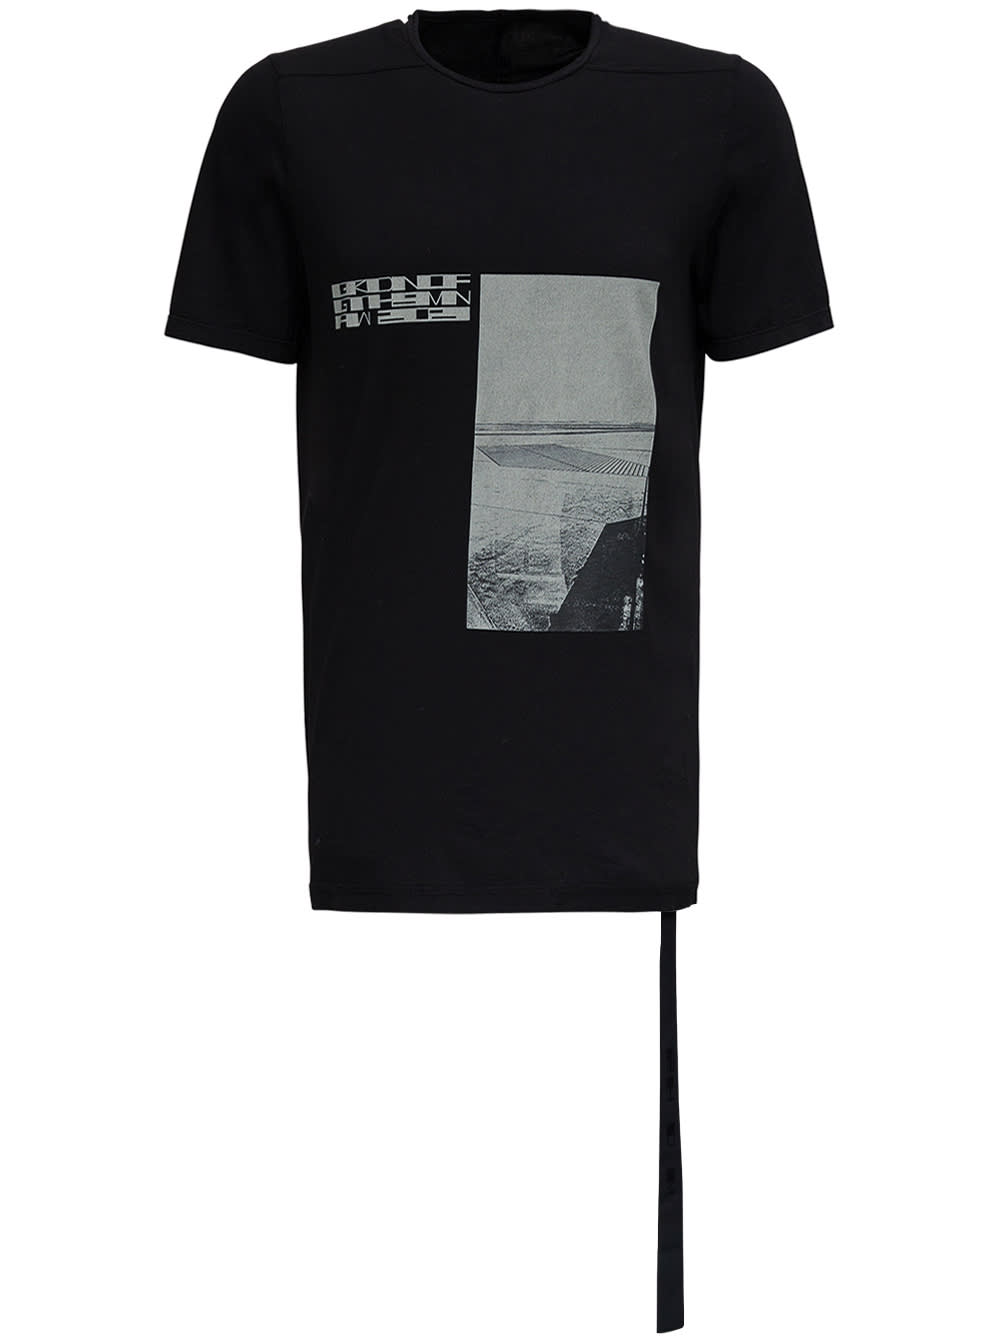 DRKSHDW Black Cotton T-shirt With Print